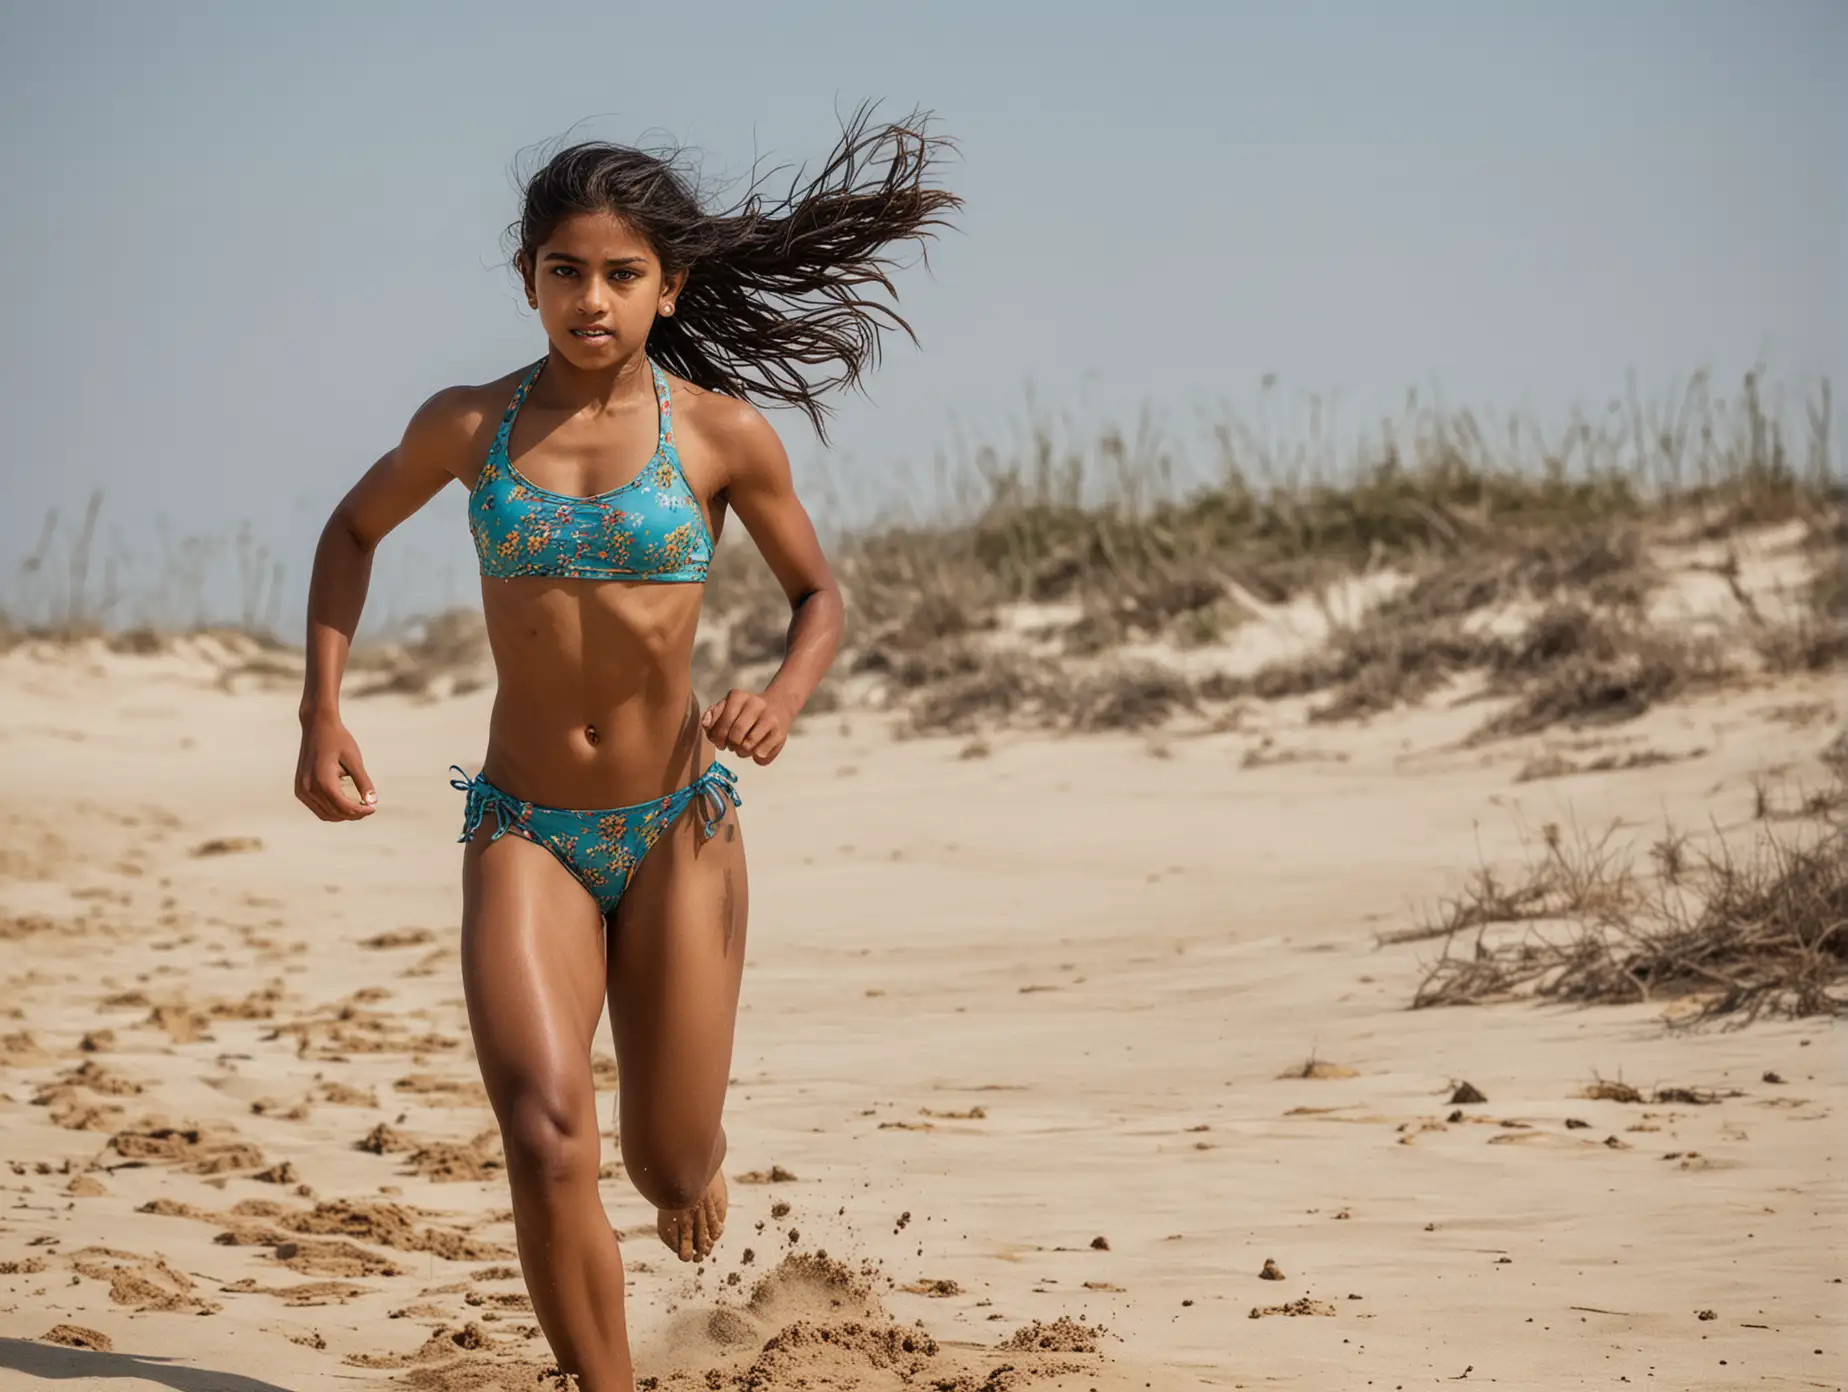 15 year old Indian girl, muscular, wearing a bikini, running in sand